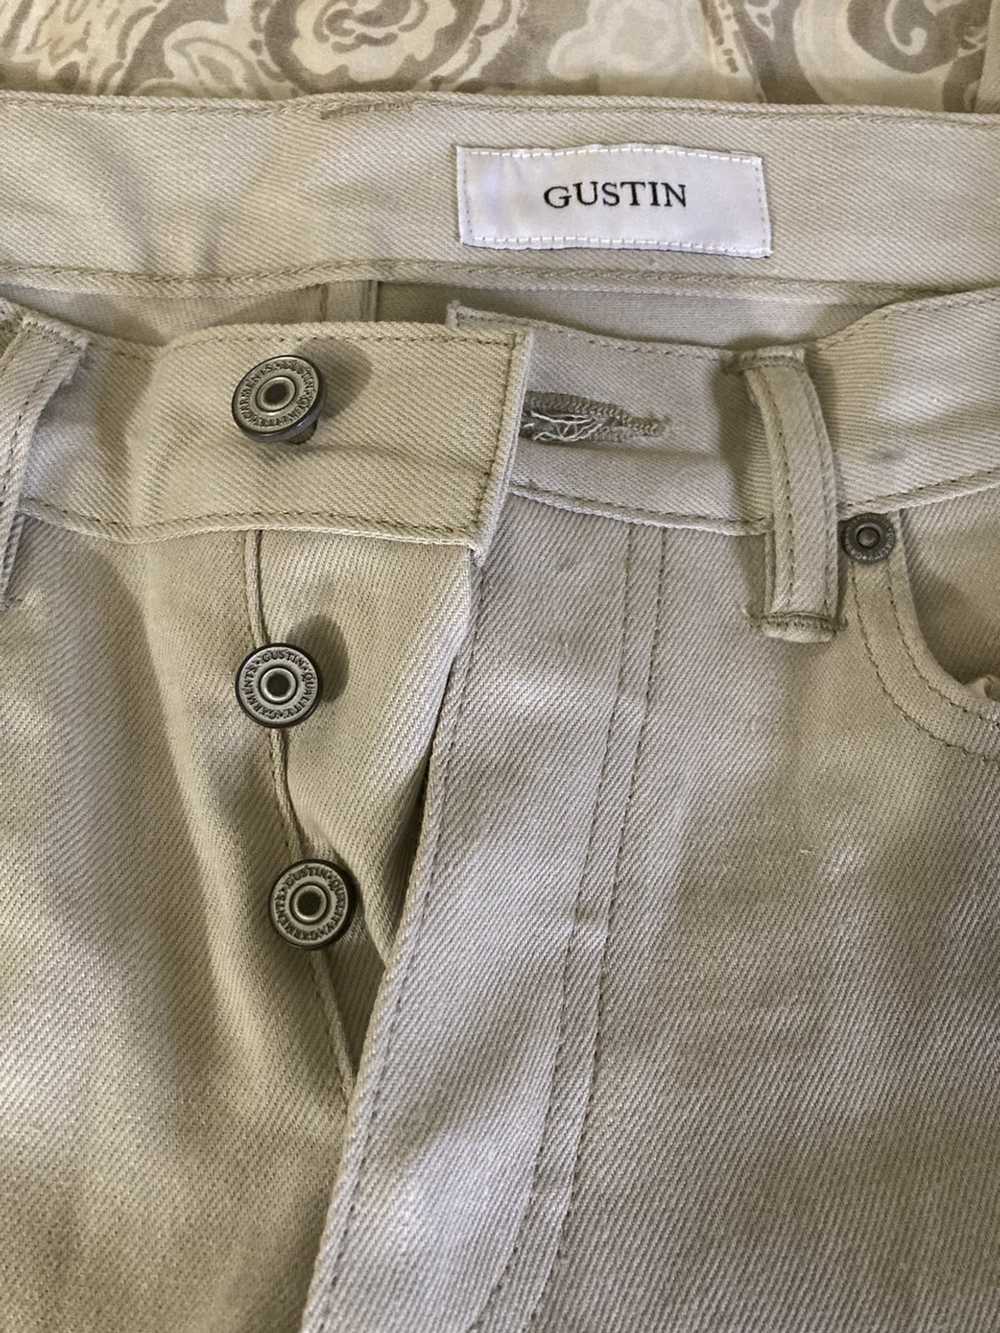 Gustin Gustin Men’s 31 Slim Fit Raw Denim Jeans - image 8